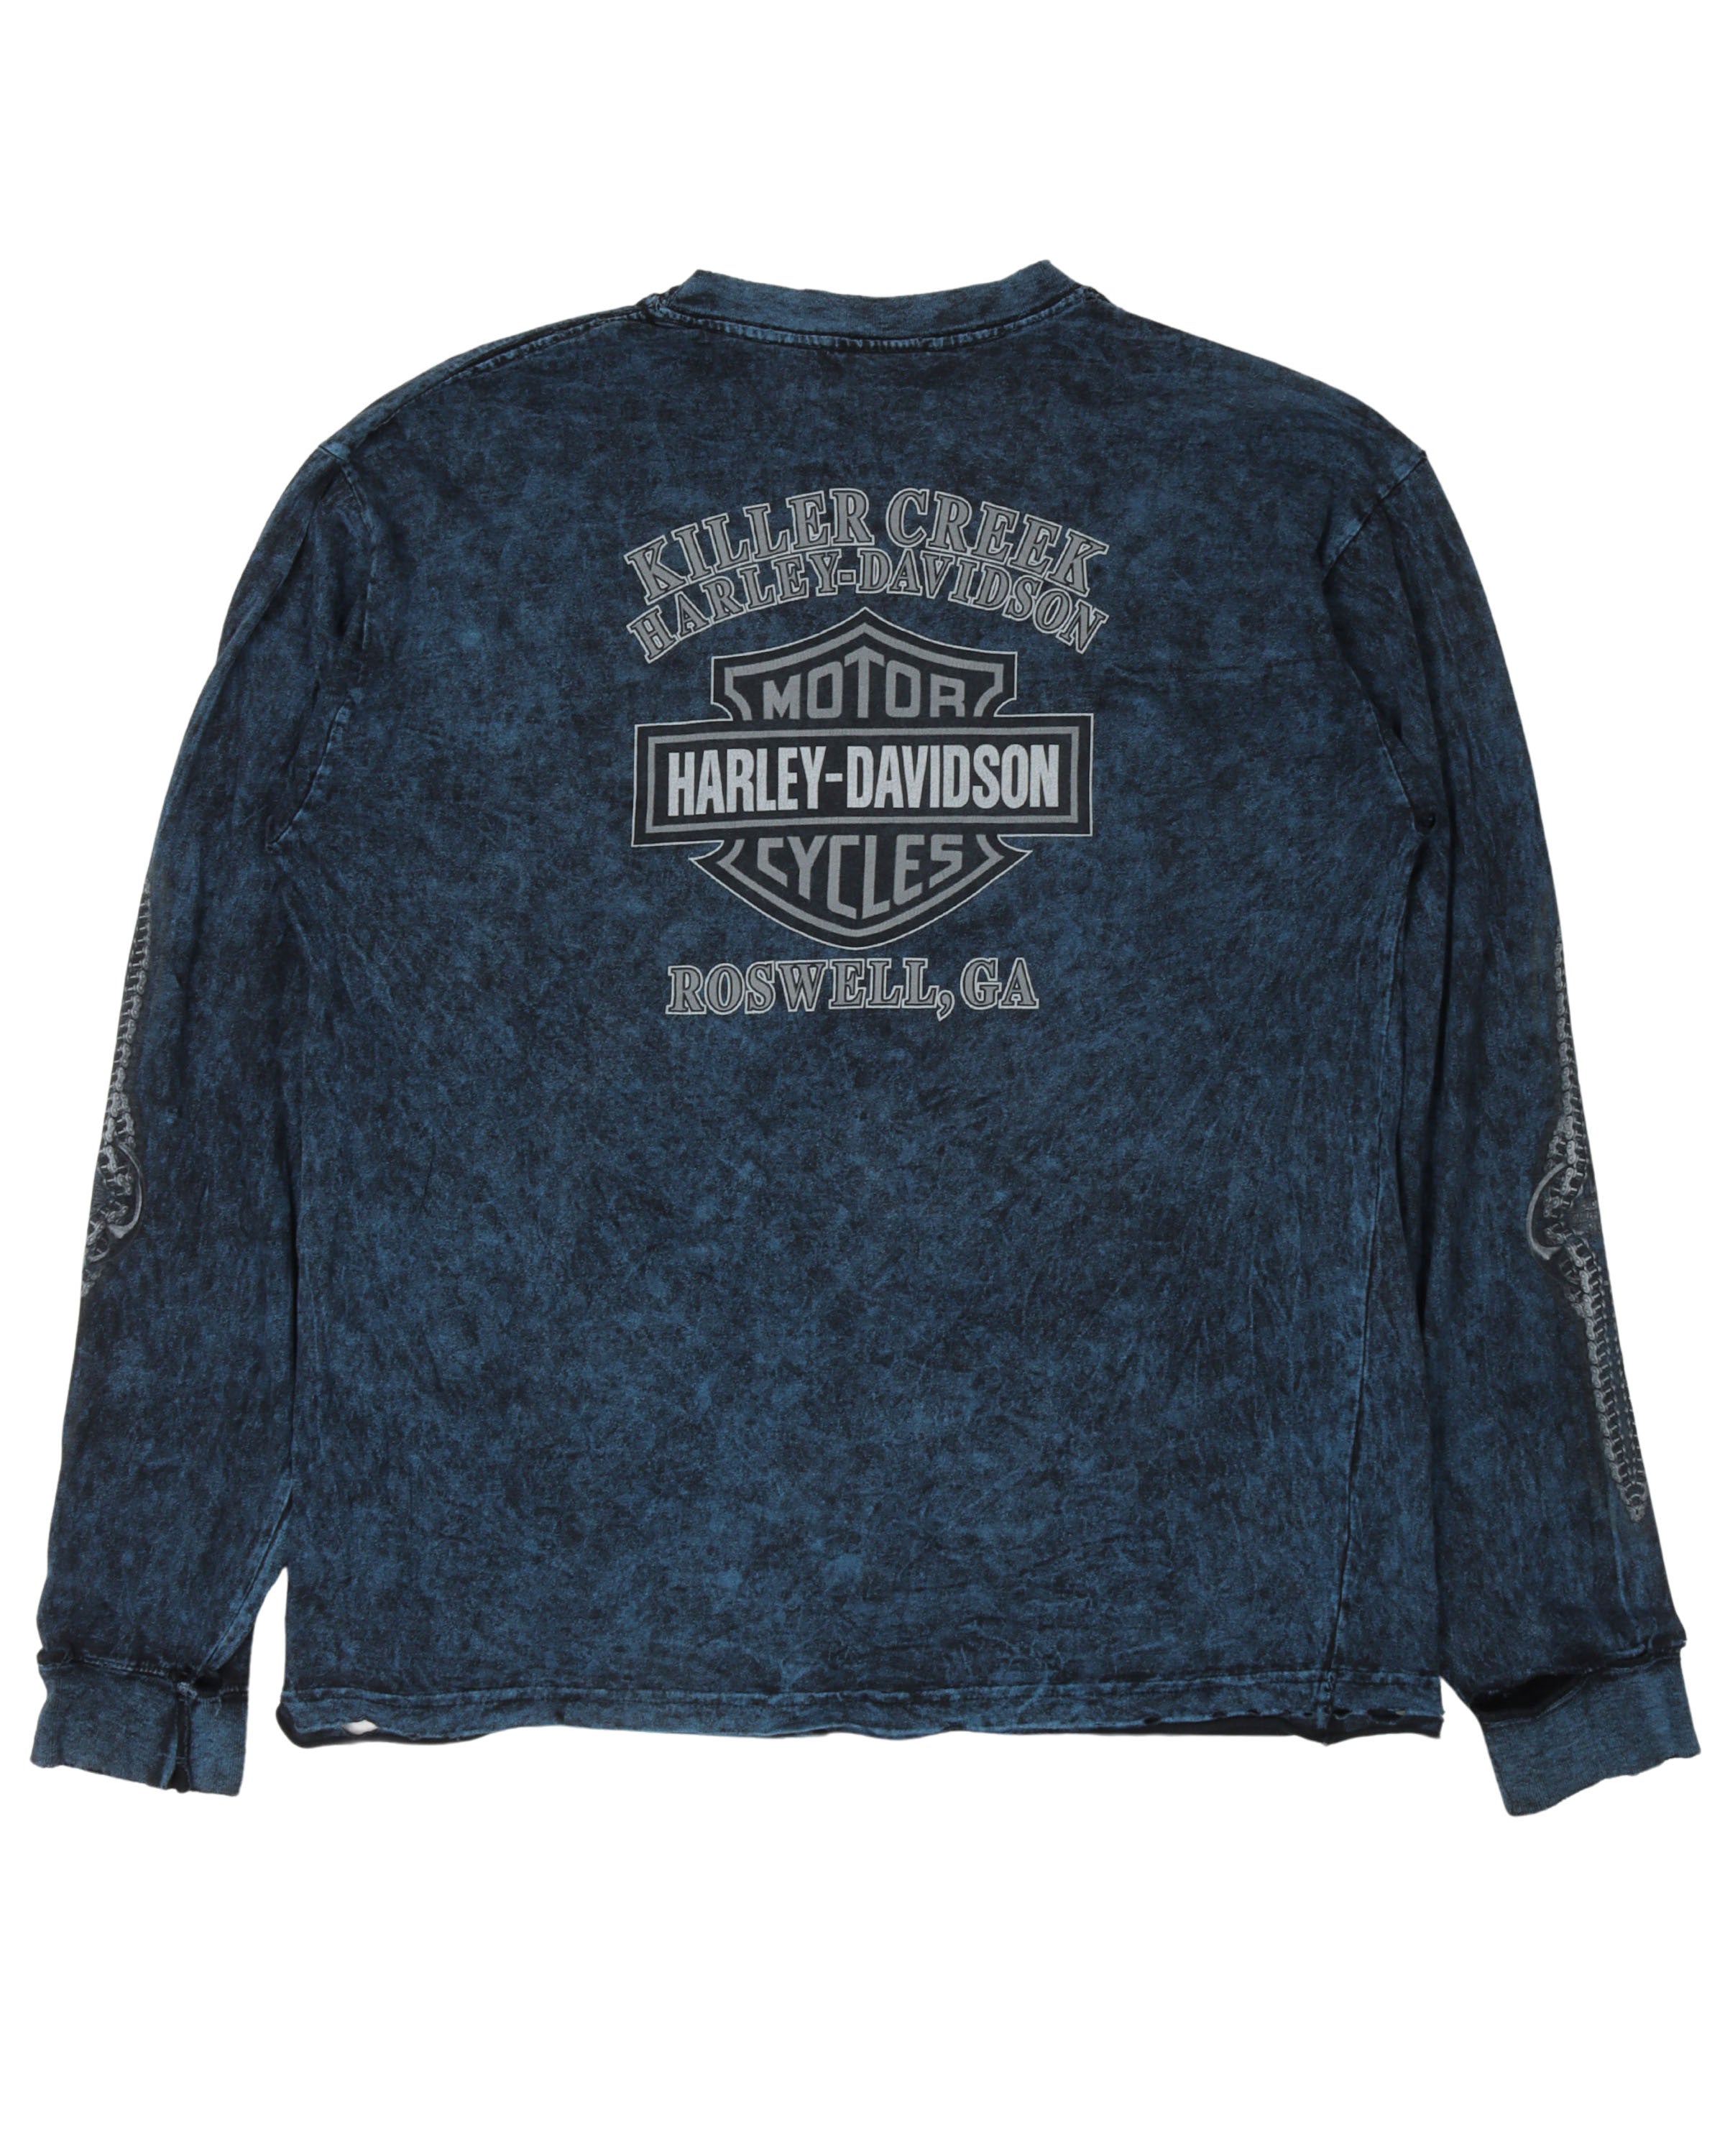 Harley Davidson Killer Creek Long Sleeve T-Shirt